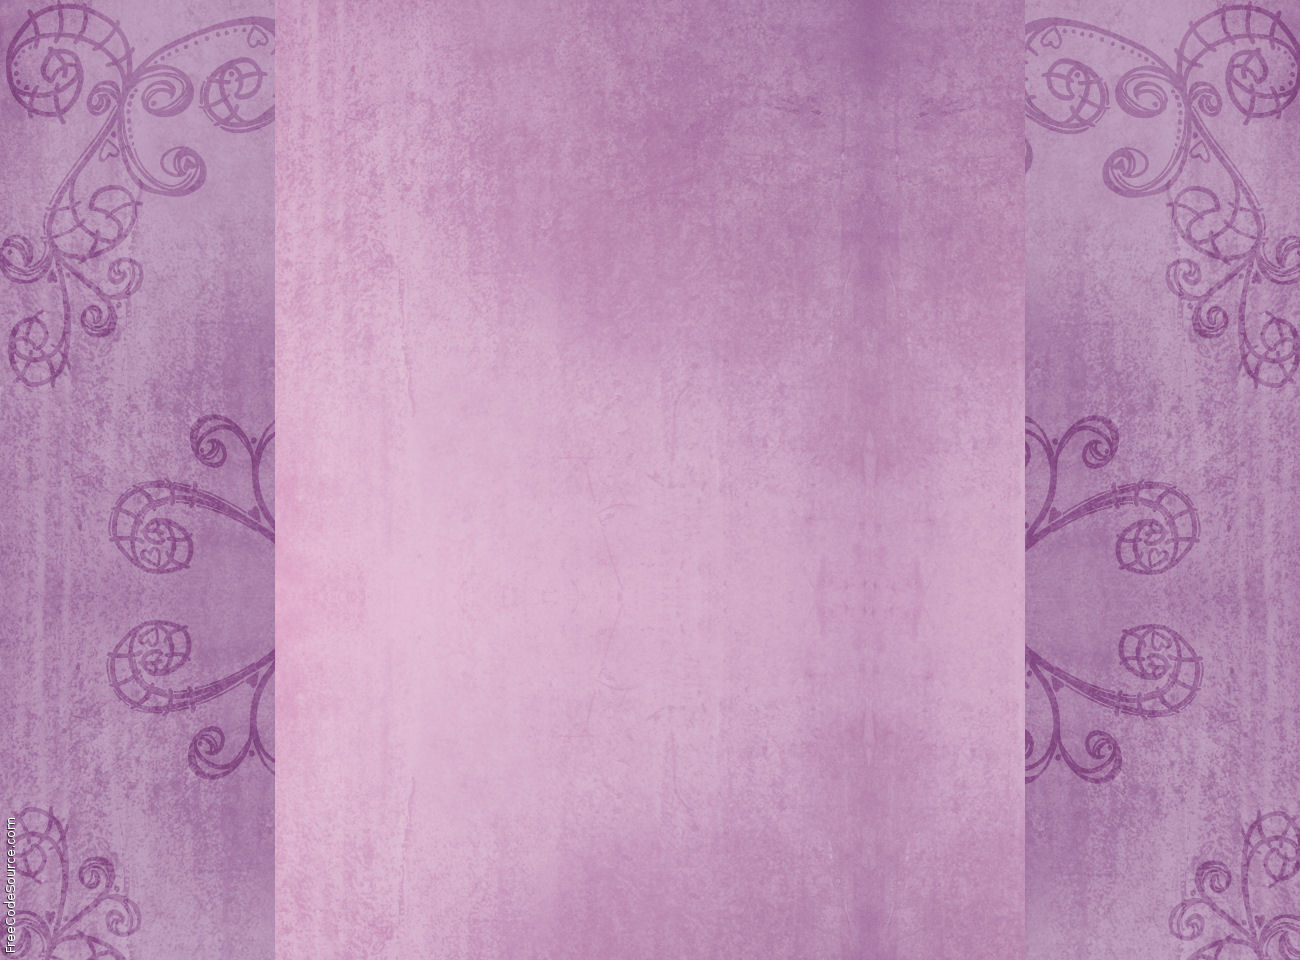 Purple Designs Formspring Backgrounds Purple Designs Formspring